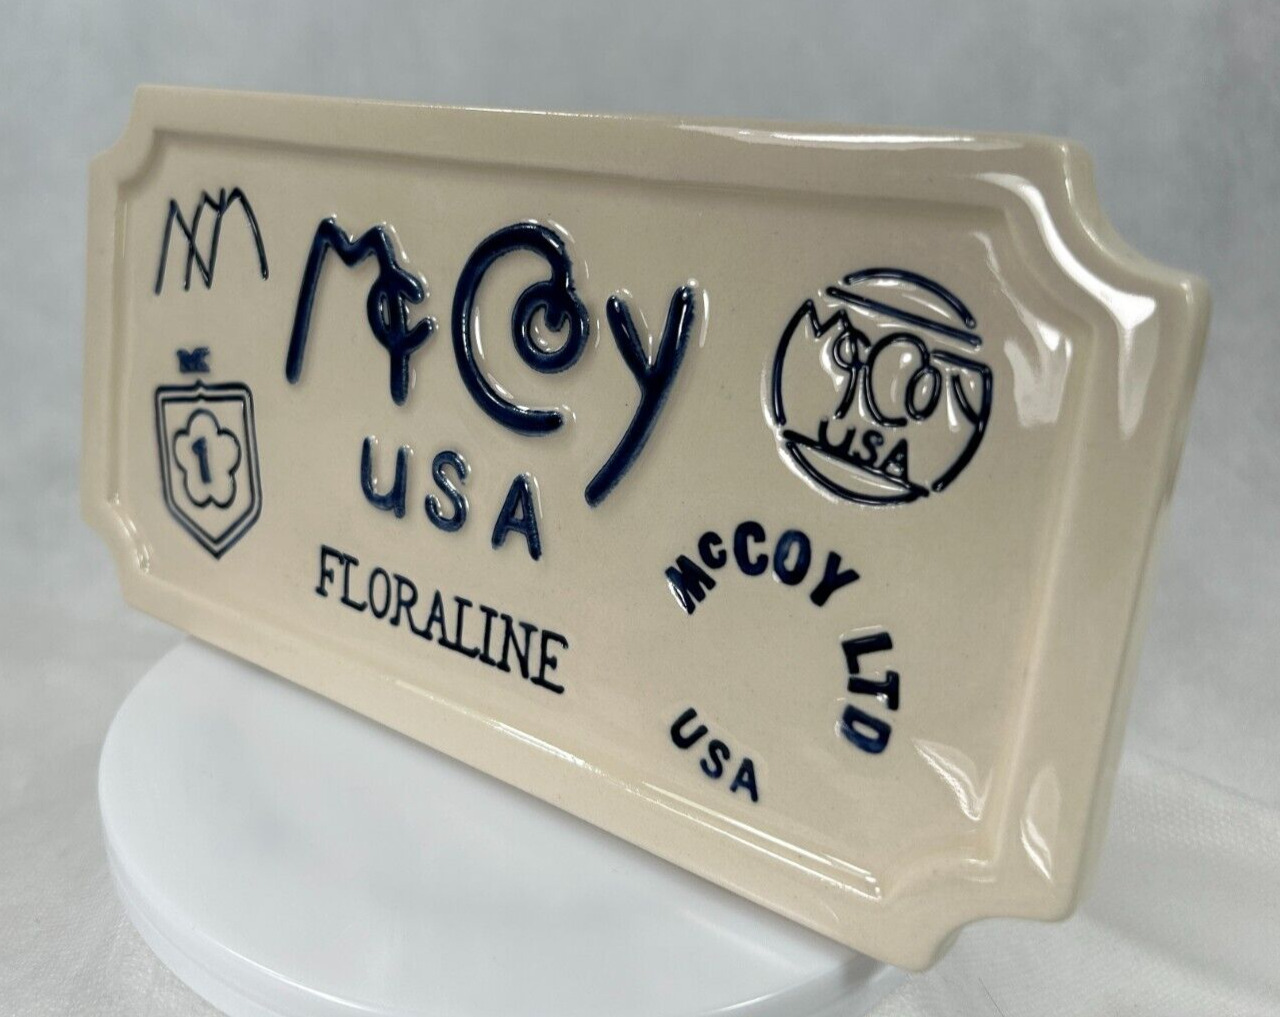 McCoy Floraline DEALER SIGN Art Pottery Advertising Display Case Plaque MINT